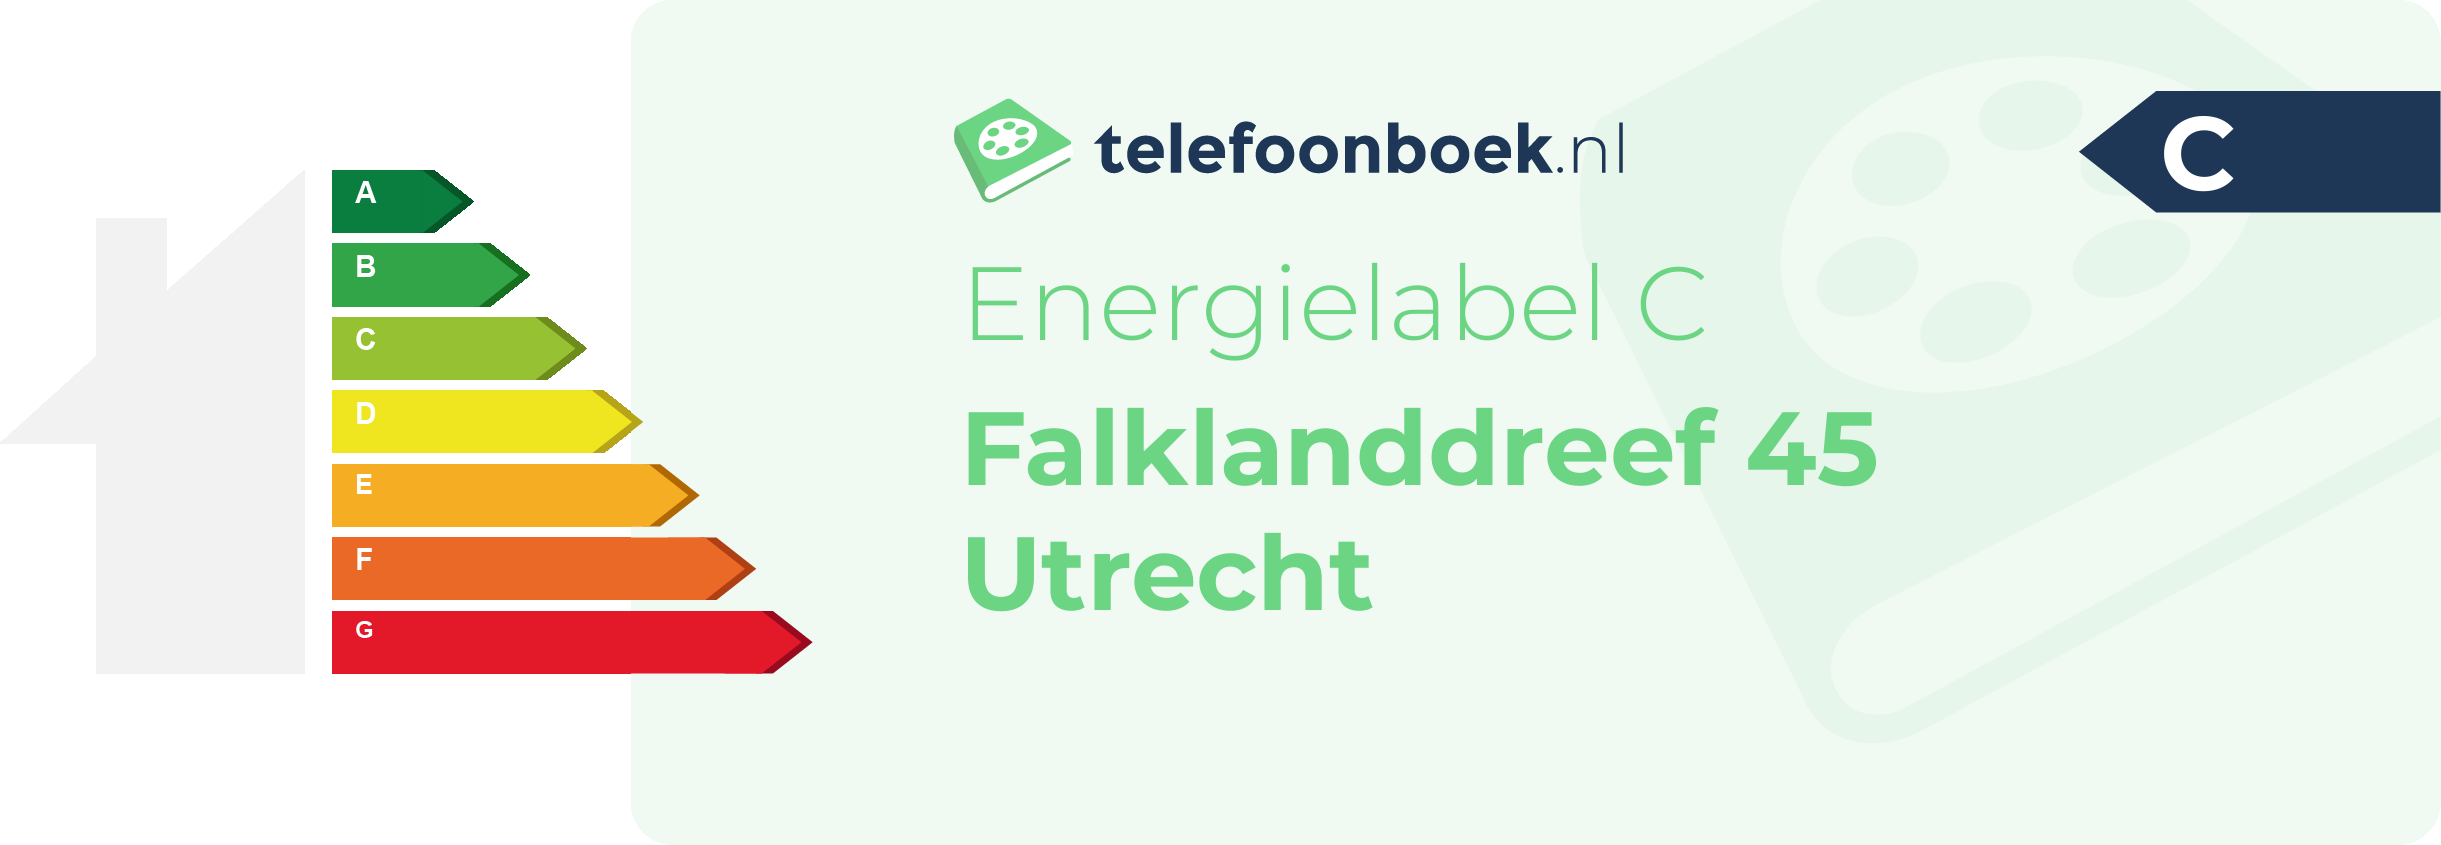 Energielabel Falklanddreef 45 Utrecht